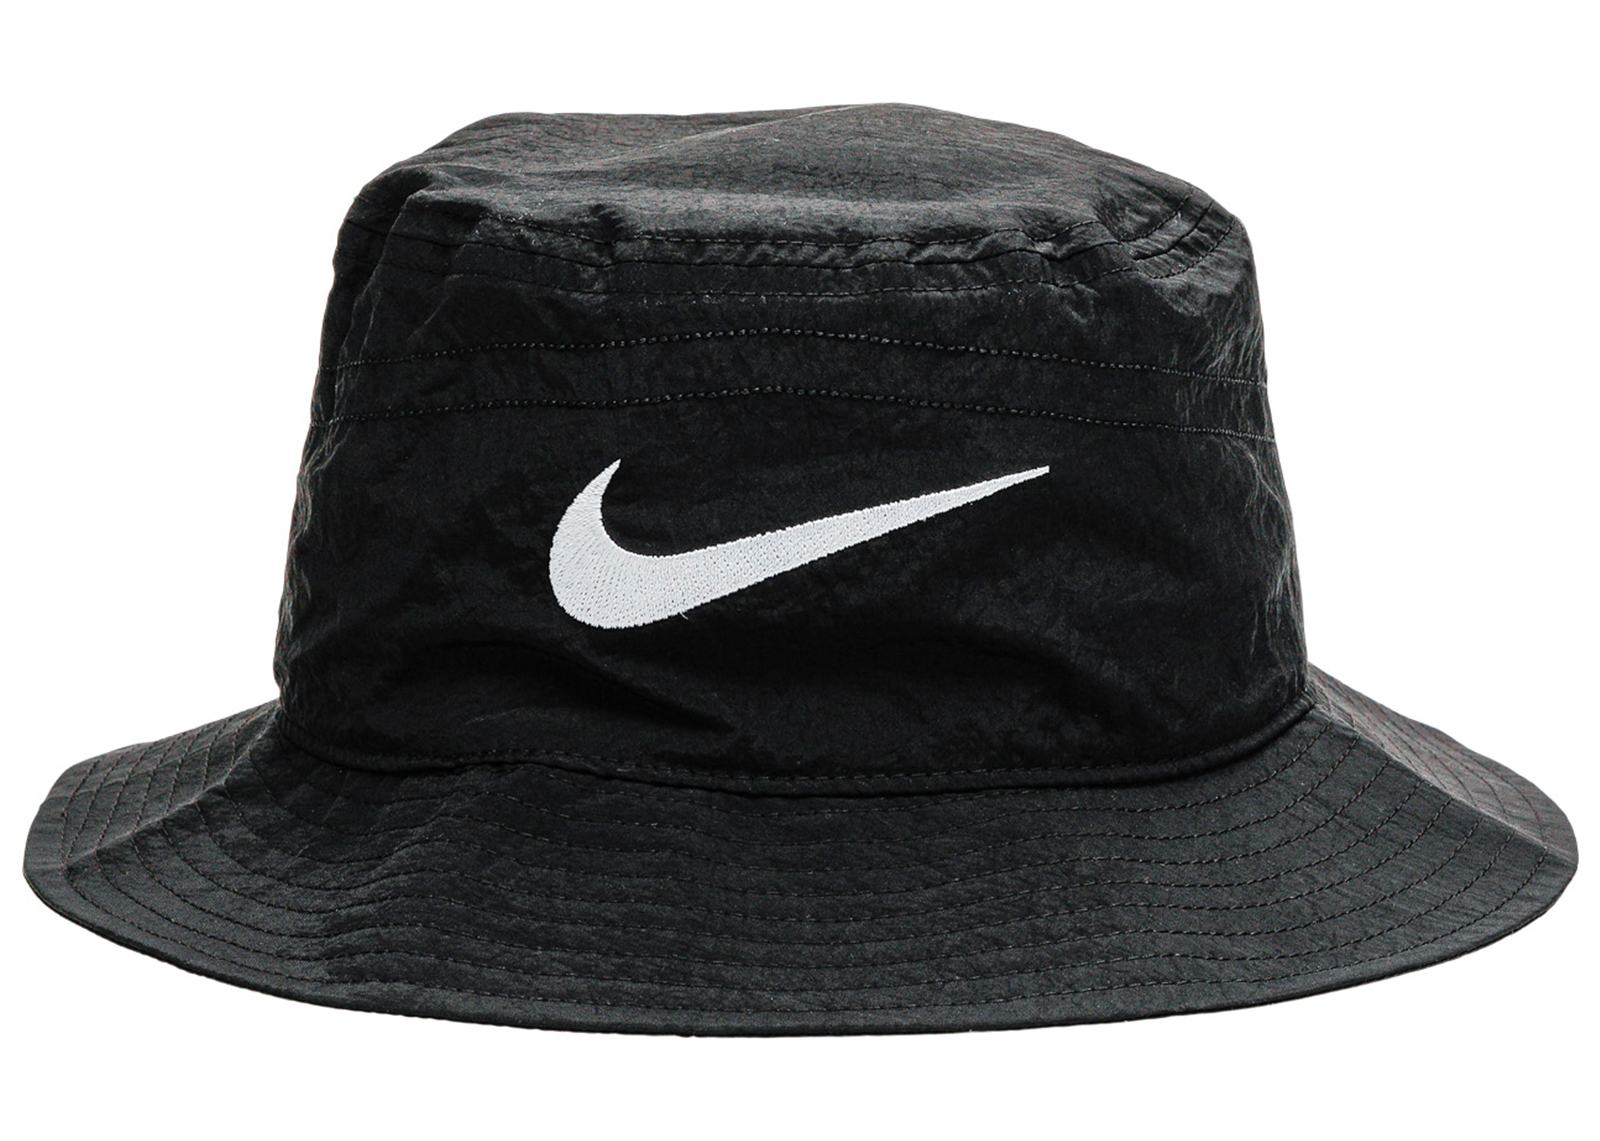 Nike x Stussy Bucket Hat Black - SS20 - US